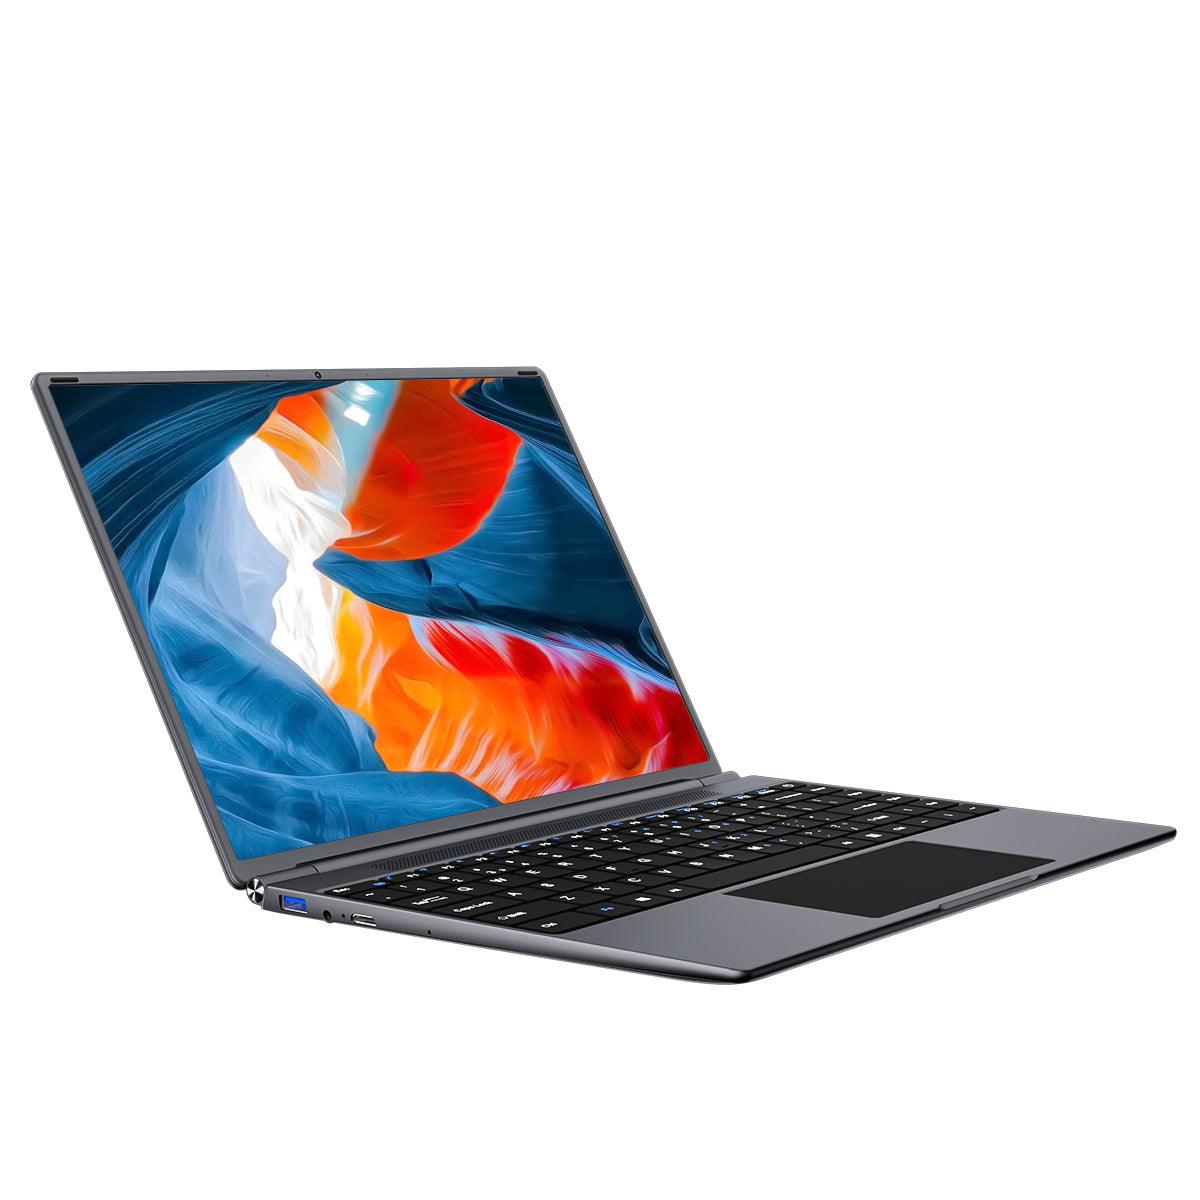 kuu 13.5 inch Ultra Thin Laptop KUU YOBOOK M Intel N4020 CPU, 6GB RAM+128GB SSD  Laptop- IN STORE ONLY $299.99